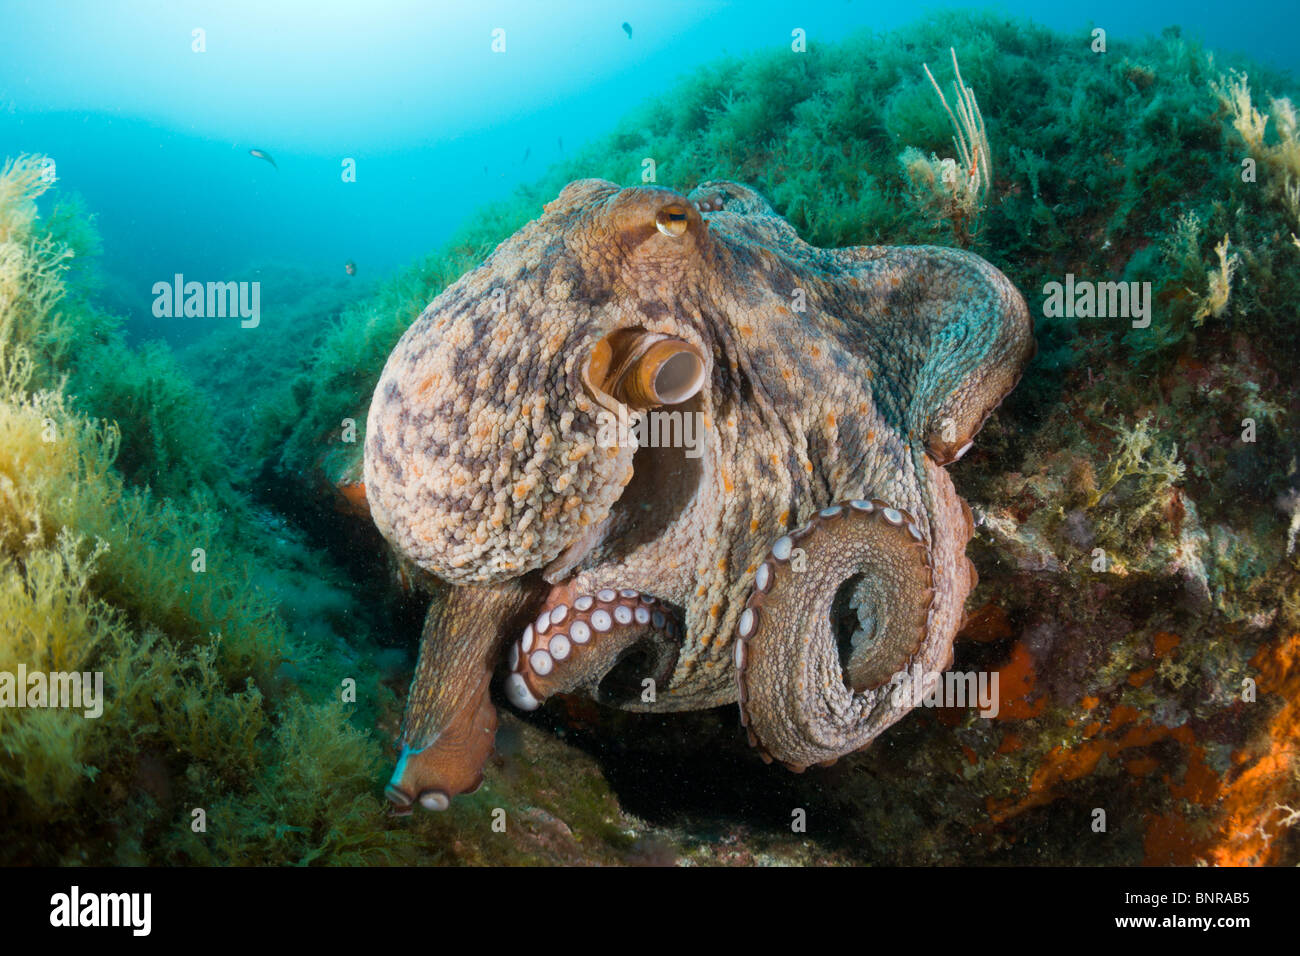 Common Octopus over Reef, Octopus vulgaris, Cap de Creus, Costa Brava, Spain Stock Photo